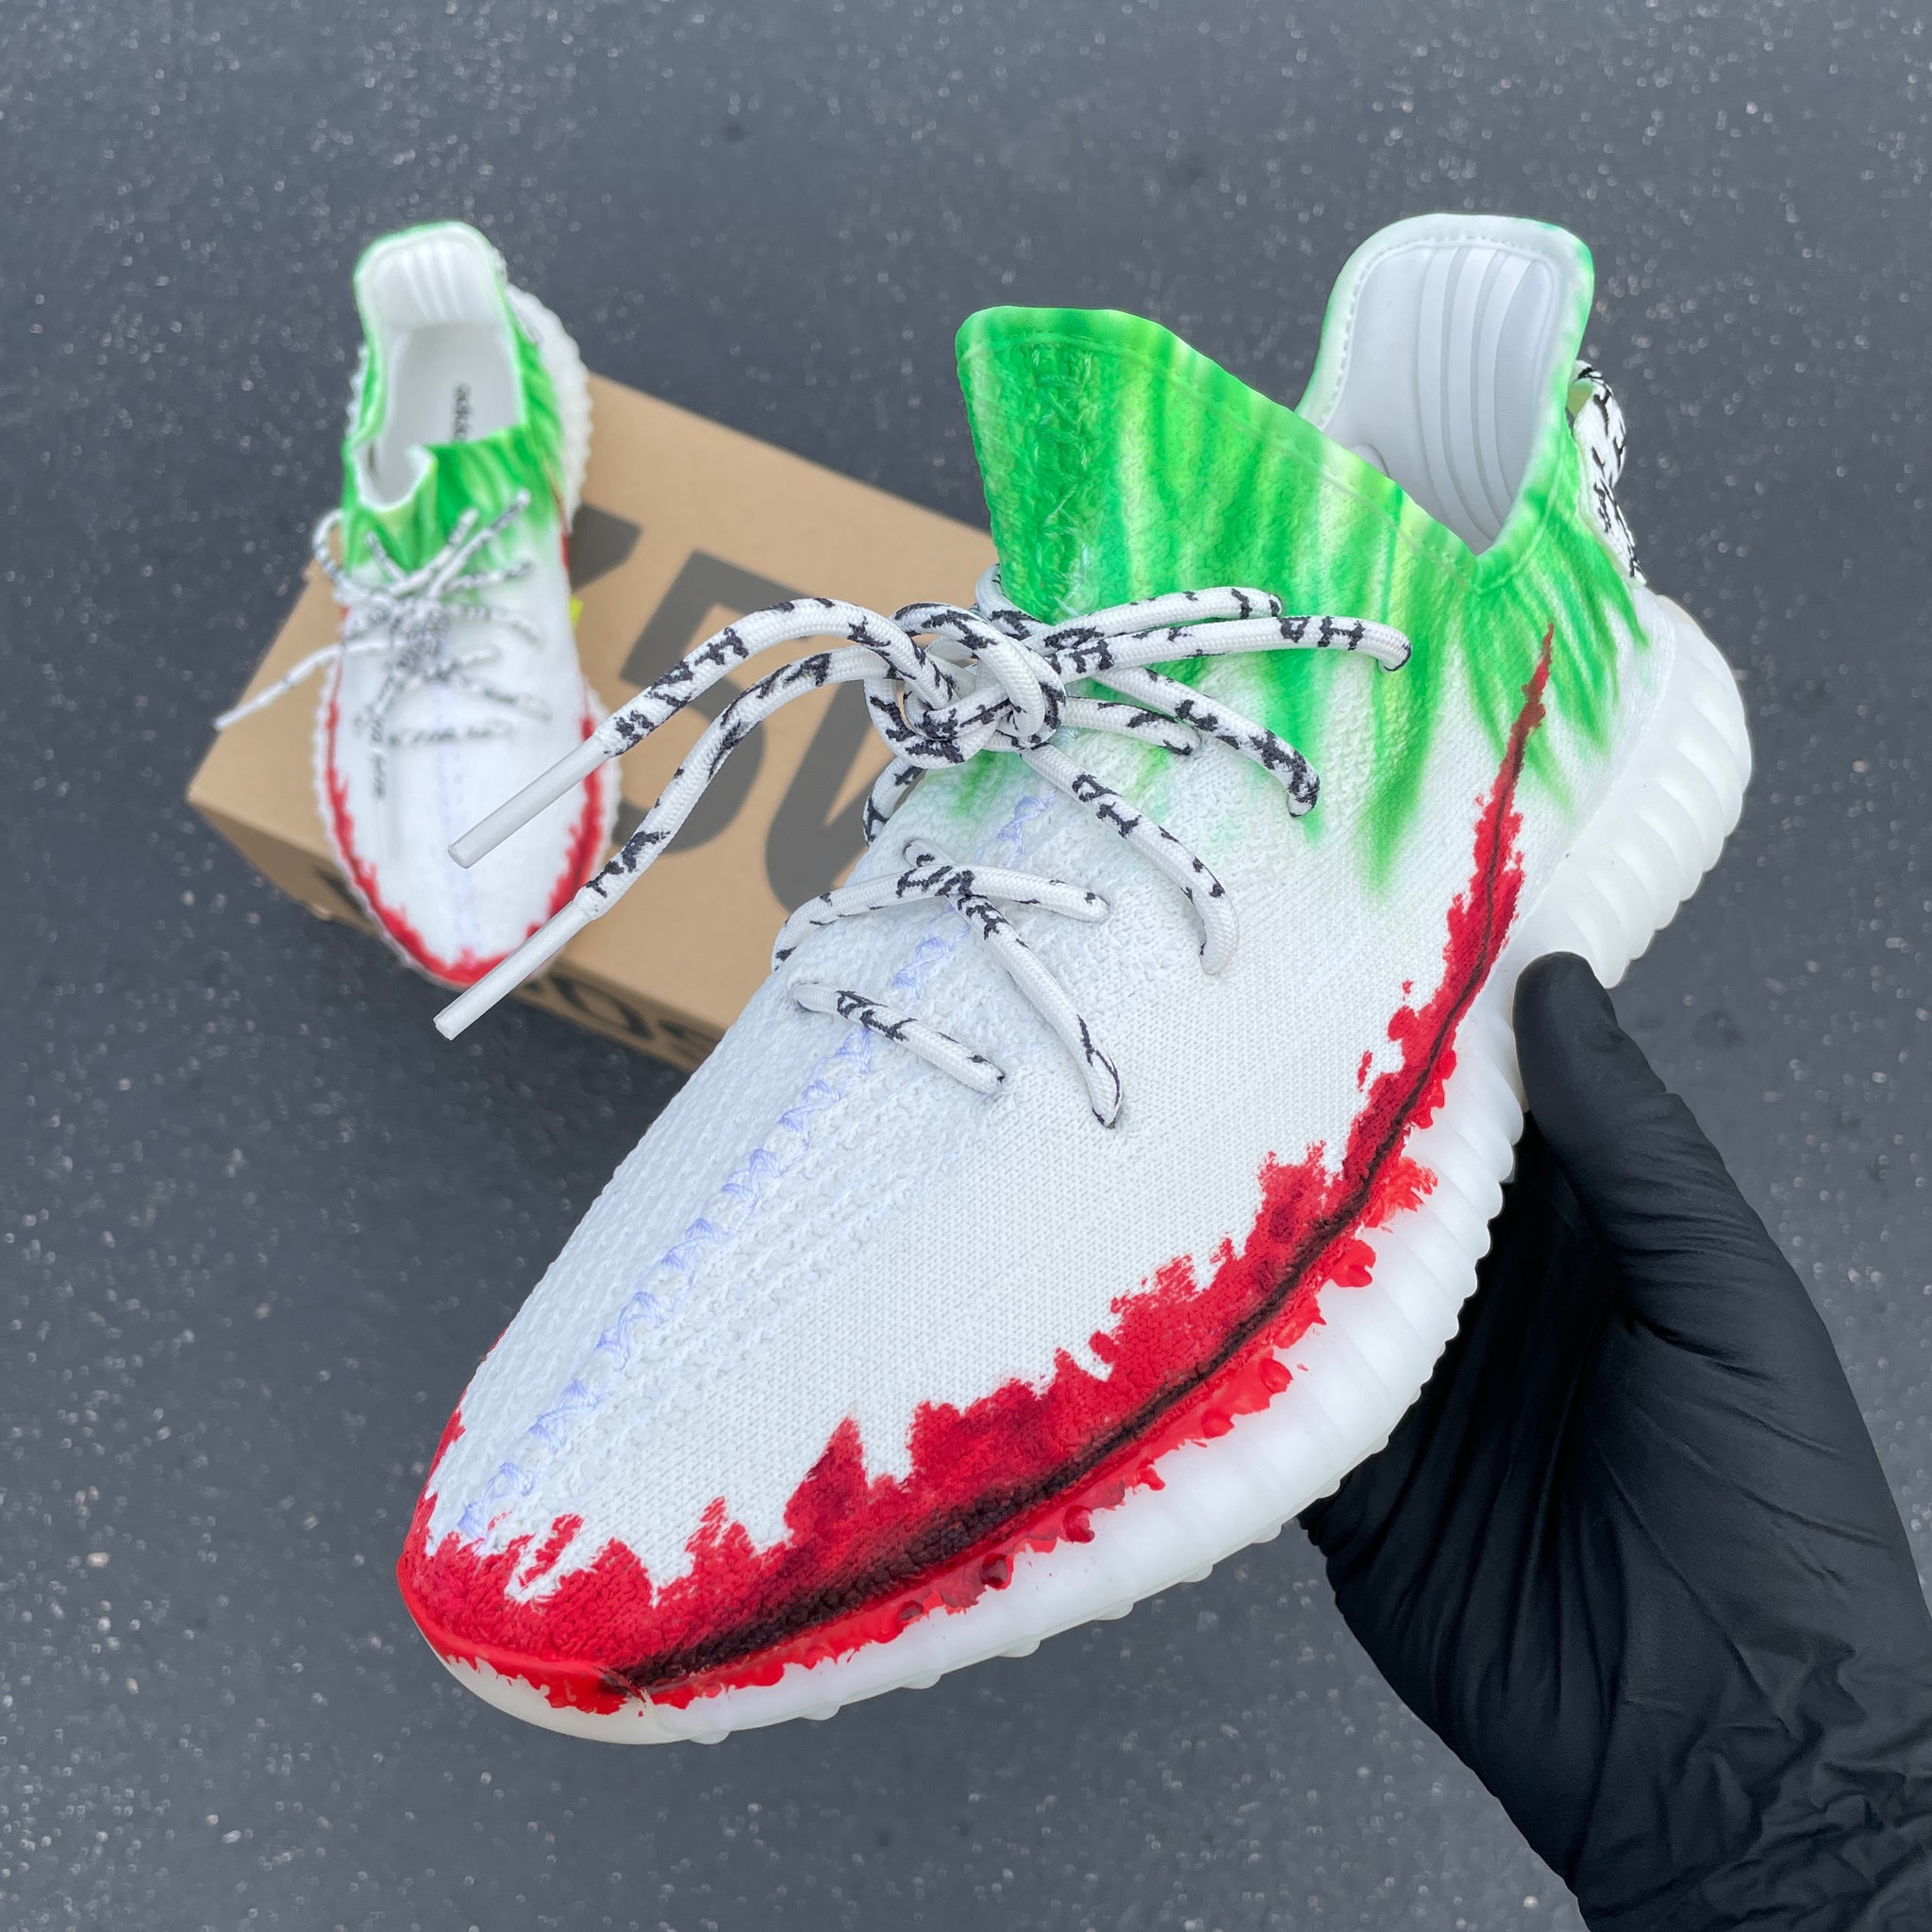 Men's size 11.5 White Yeezy Boost 350 Sneakers - Joker Theme